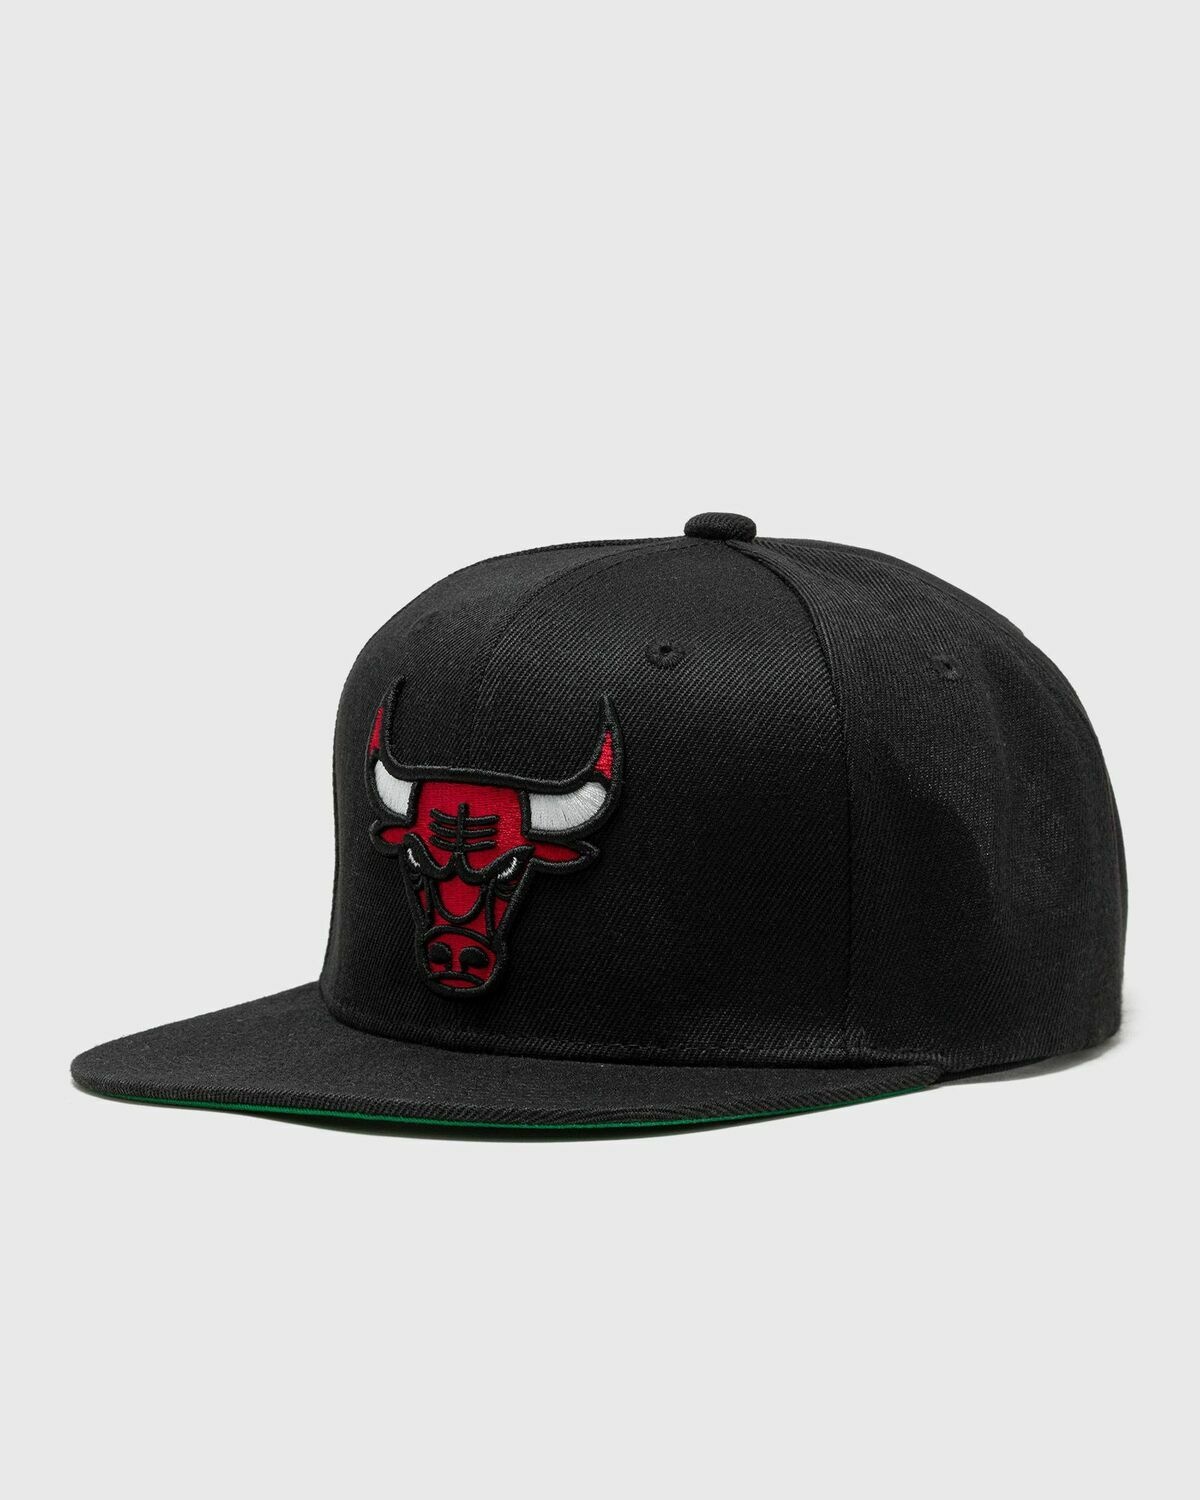 Mitchell & Ness Nba Side Jam Snapback Chicago Bulls Black - Mens - Caps